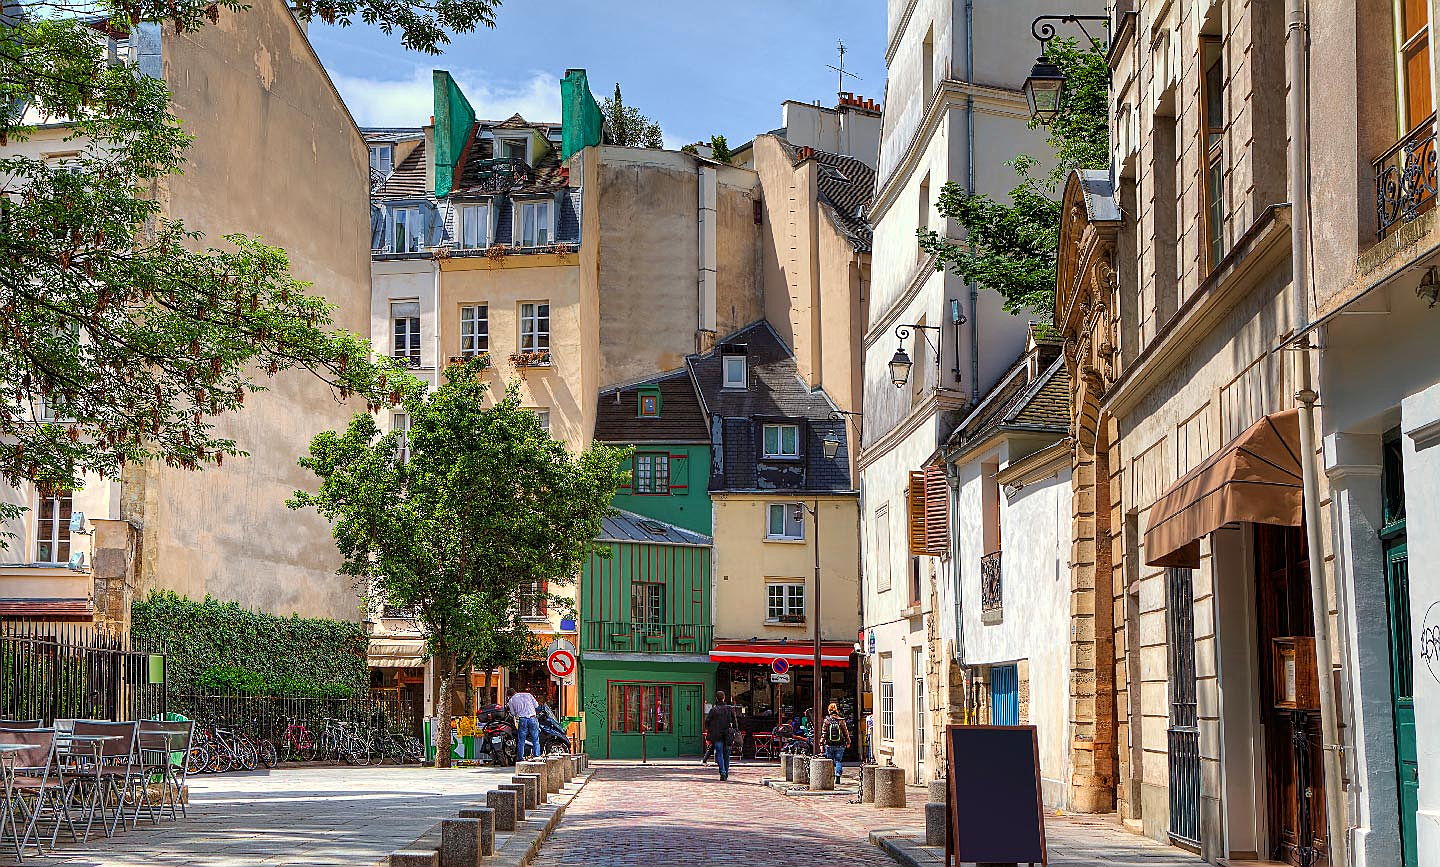  Paris
- real estate paris - buy real estate in paris - engel volkers